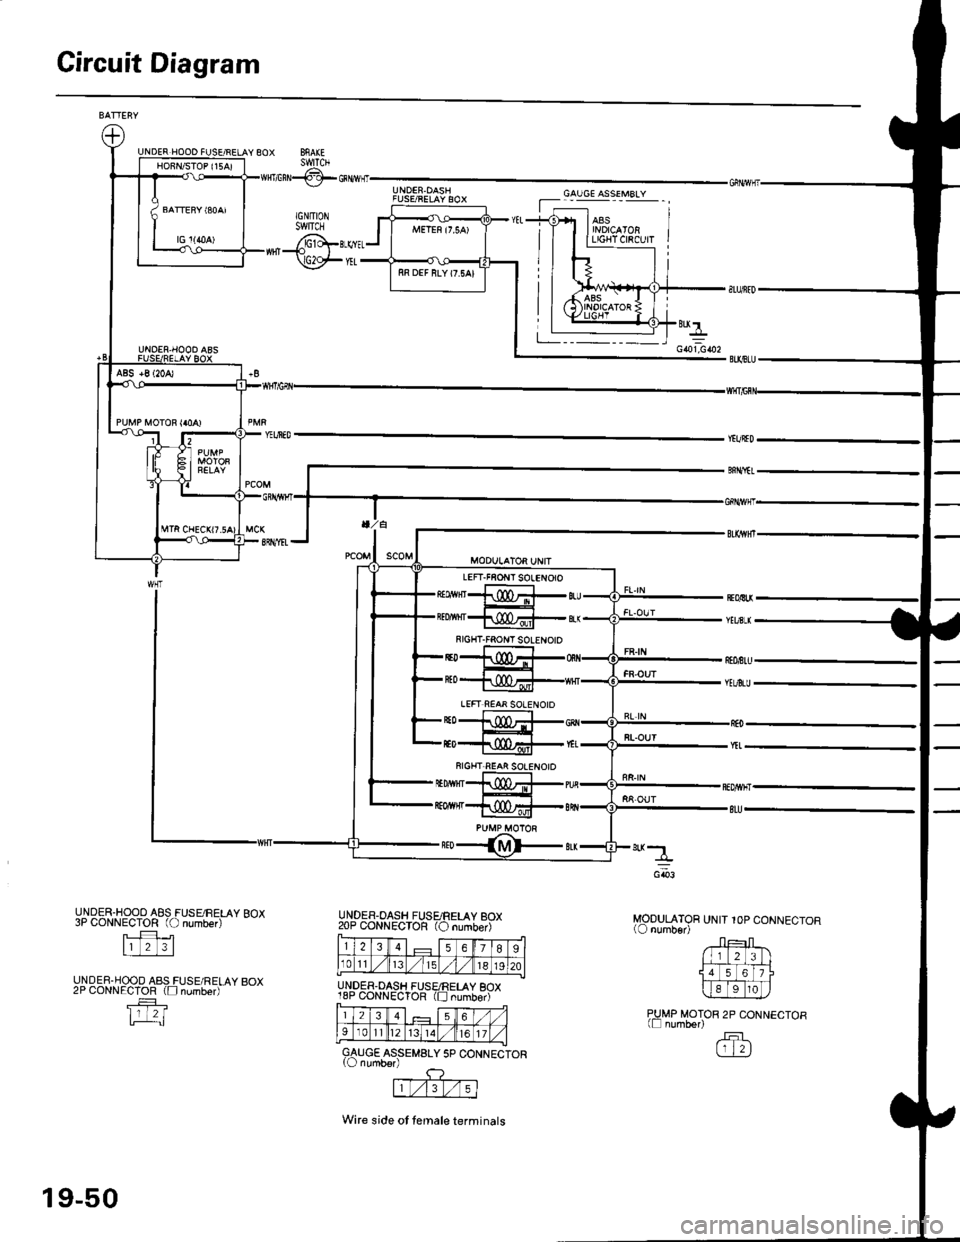 HONDA CIVIC 1996 6.G Workshop Manual Gircuit Diagram
MOOULATOR UNIT IOP CONNECTOR
zrJrF!_lll 2 3ll
14TiEltl
c@4
PIMP MOTOR 2P CONNECTOR(Ll number)fFlGTN
UNDER.HOOO A8S FUSE,/FELAY BOX3P CONNECTOR (O number)
| 2 3l
UNDER.HOOD AAS FUSE/REL